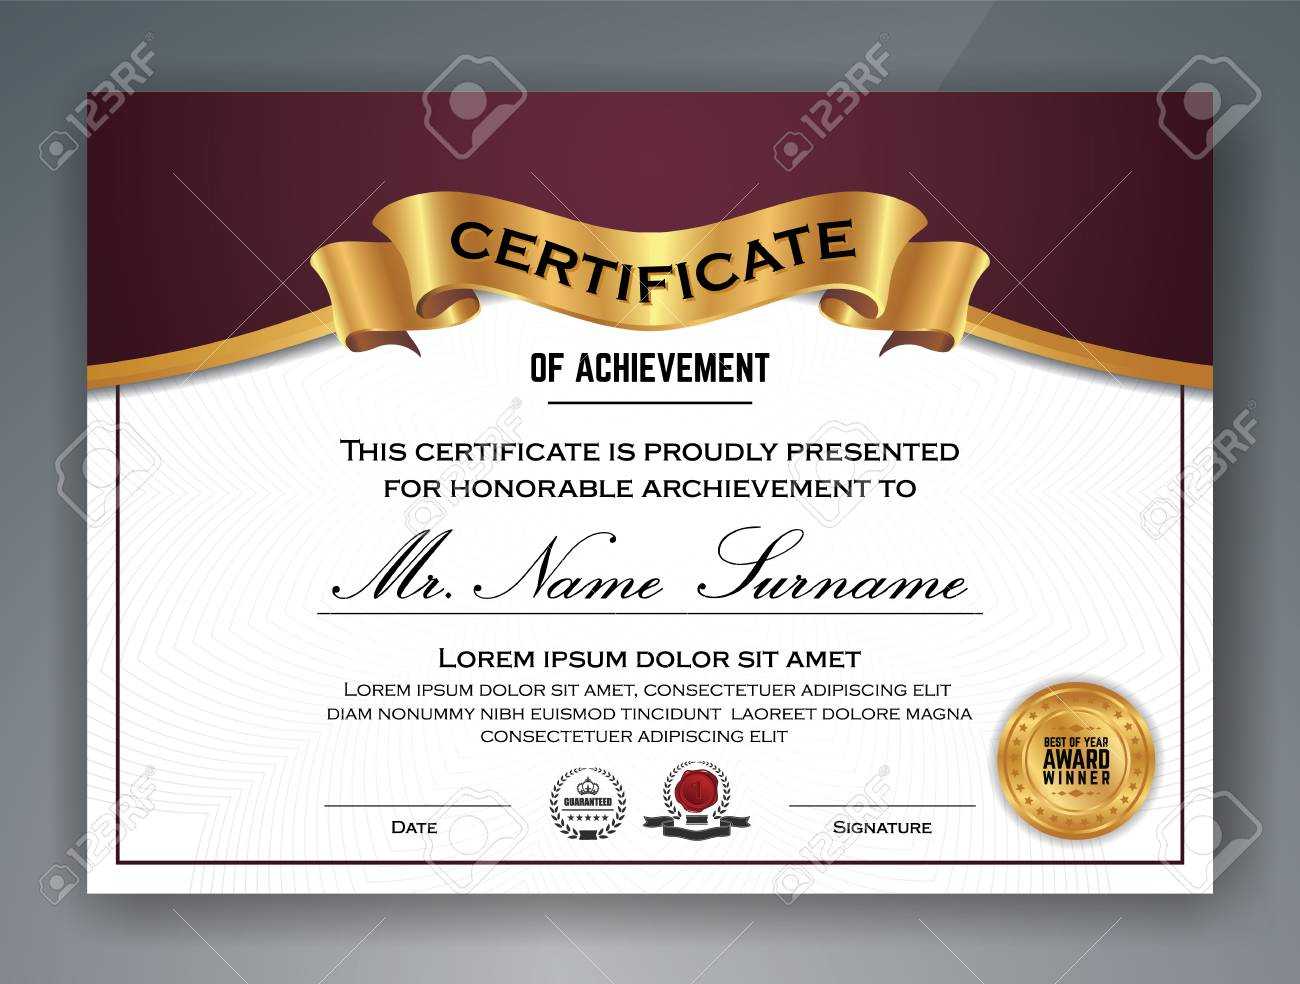 Multipurpose Professional Certificate Template Design For Print In Professional Award Certificate Template